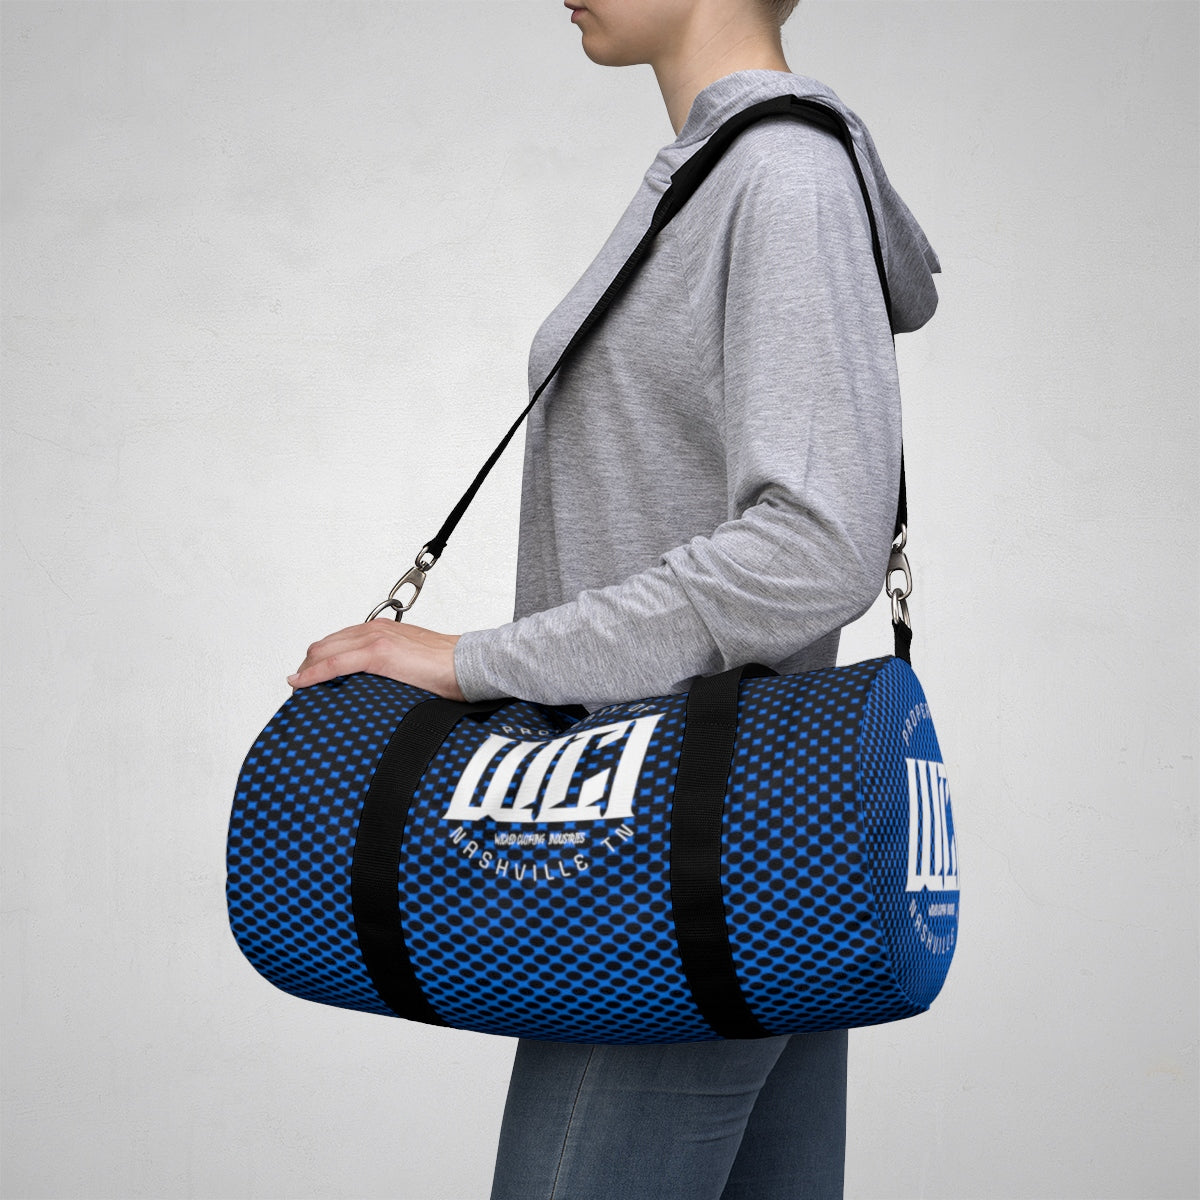 WCI/Royal Blue/ Duffle Bag